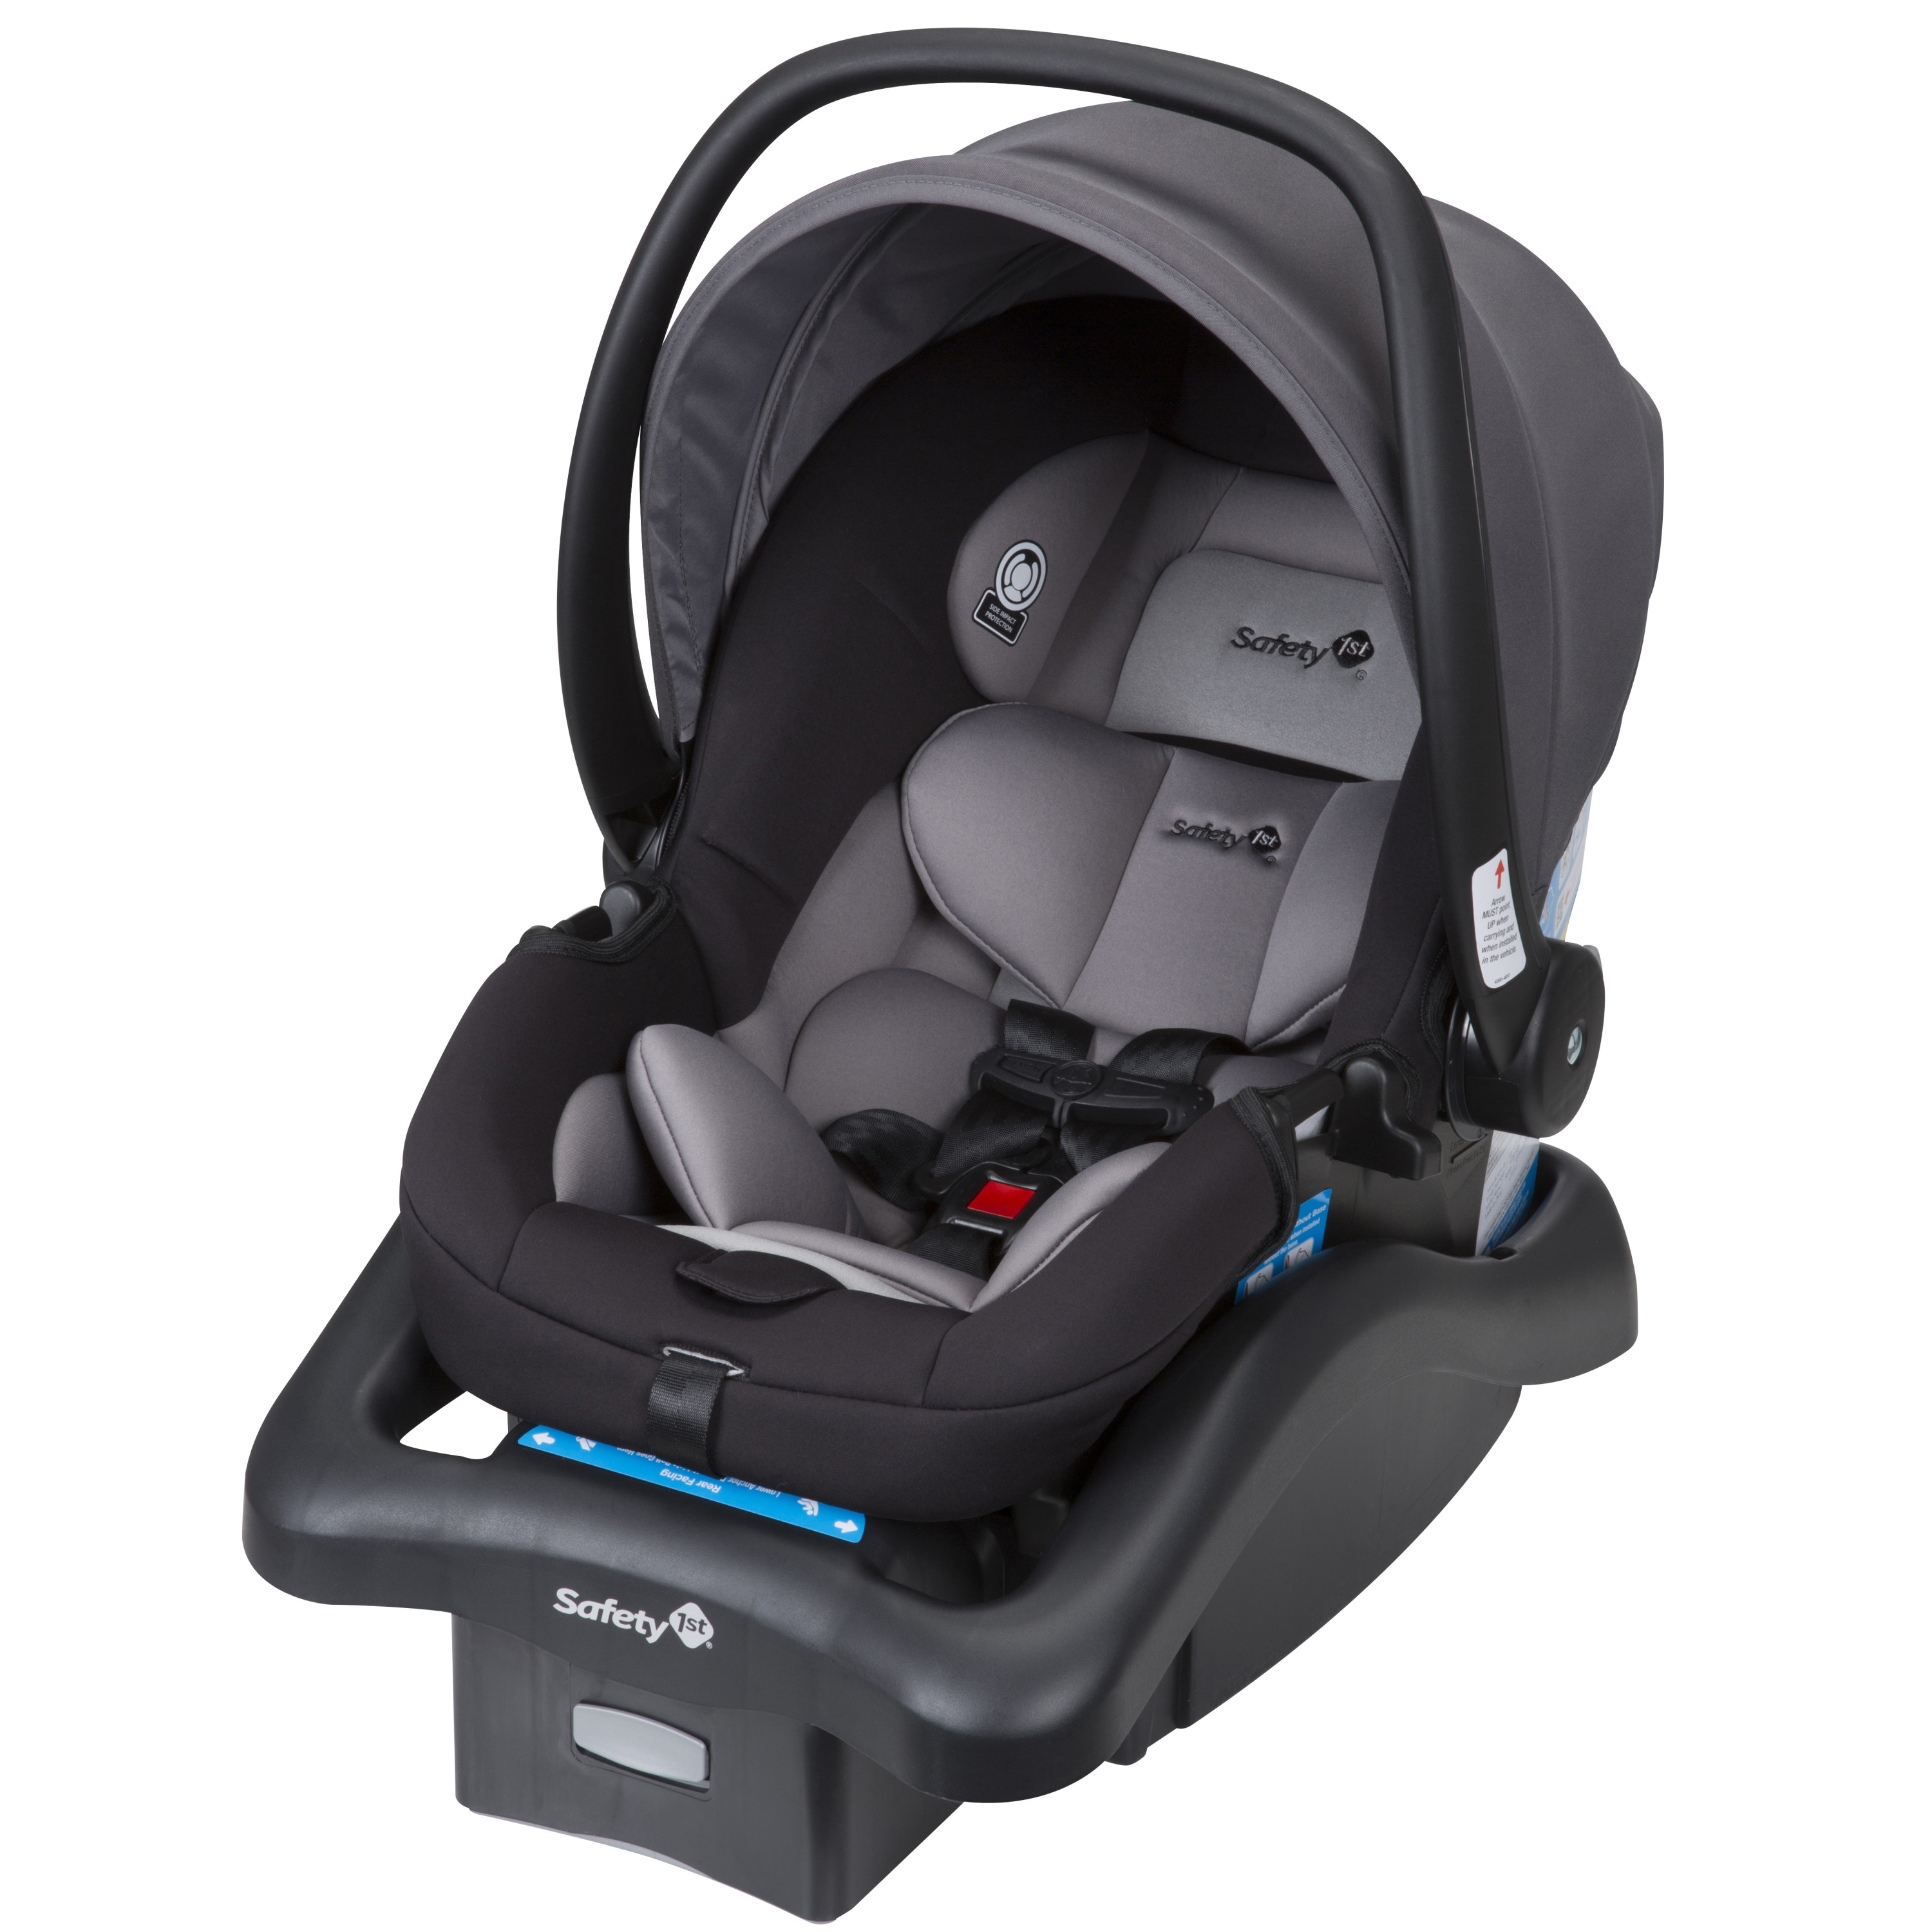 Safety 1ˢᵗ onBoard 35 LT Infant Car Seat, Monument - image 1 of 14